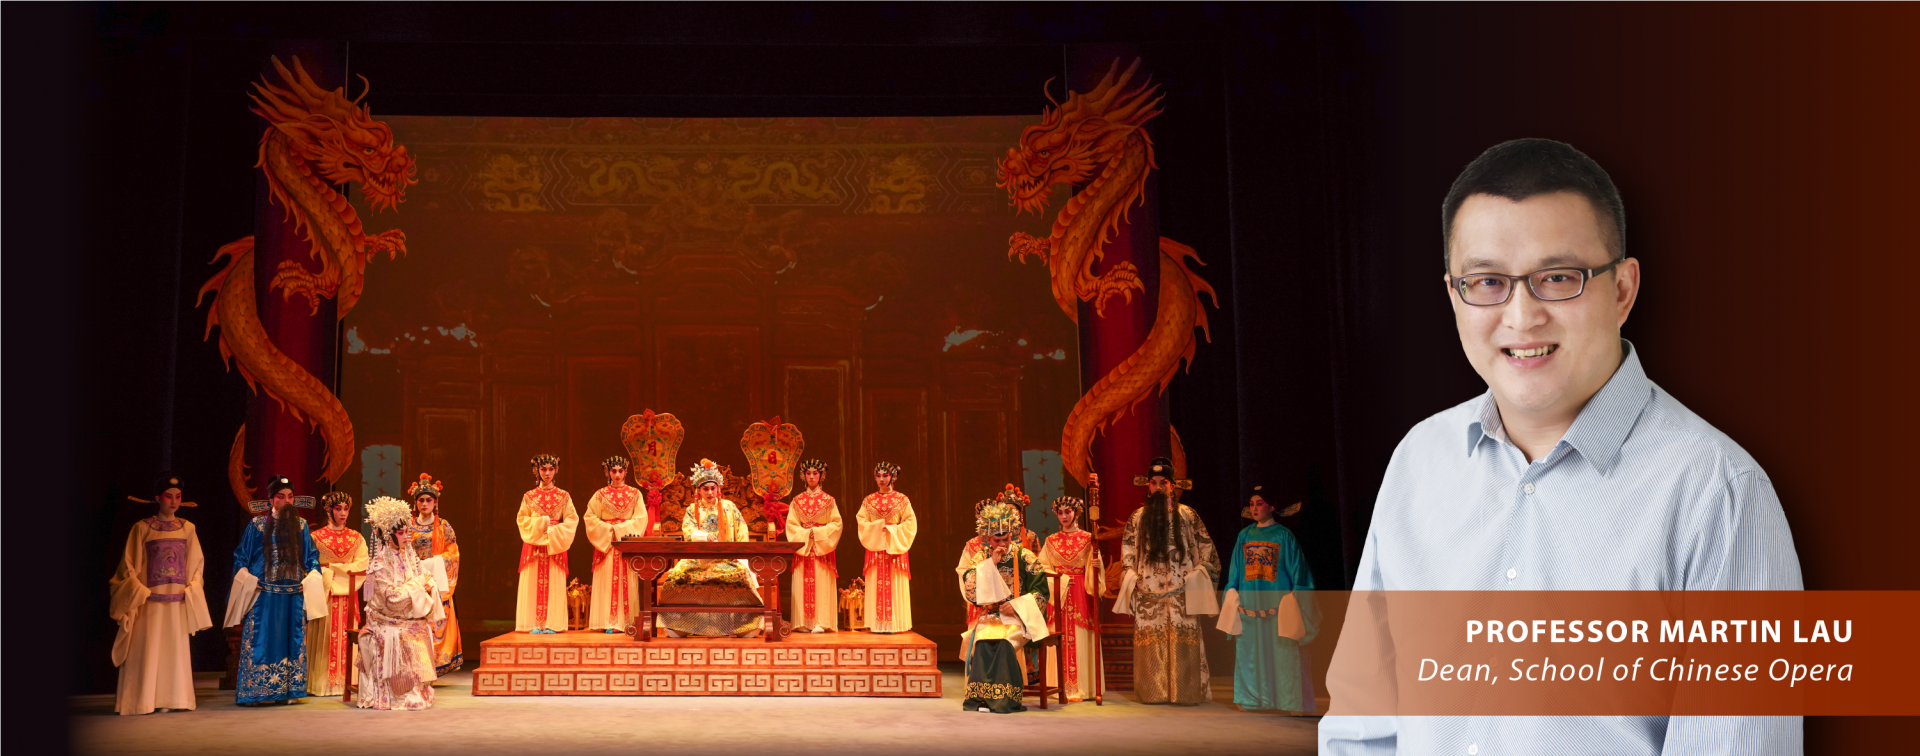 Explore the World of Chinese Opera